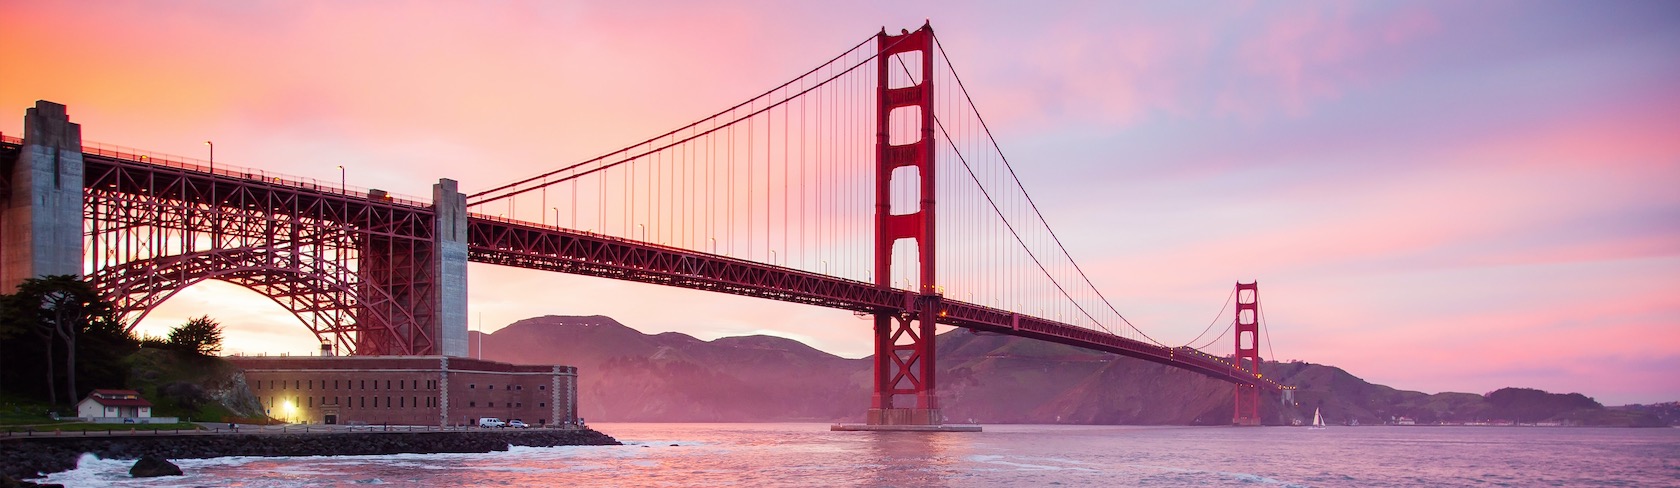 San Francisco Golden Gate Bridge ved solnedgang